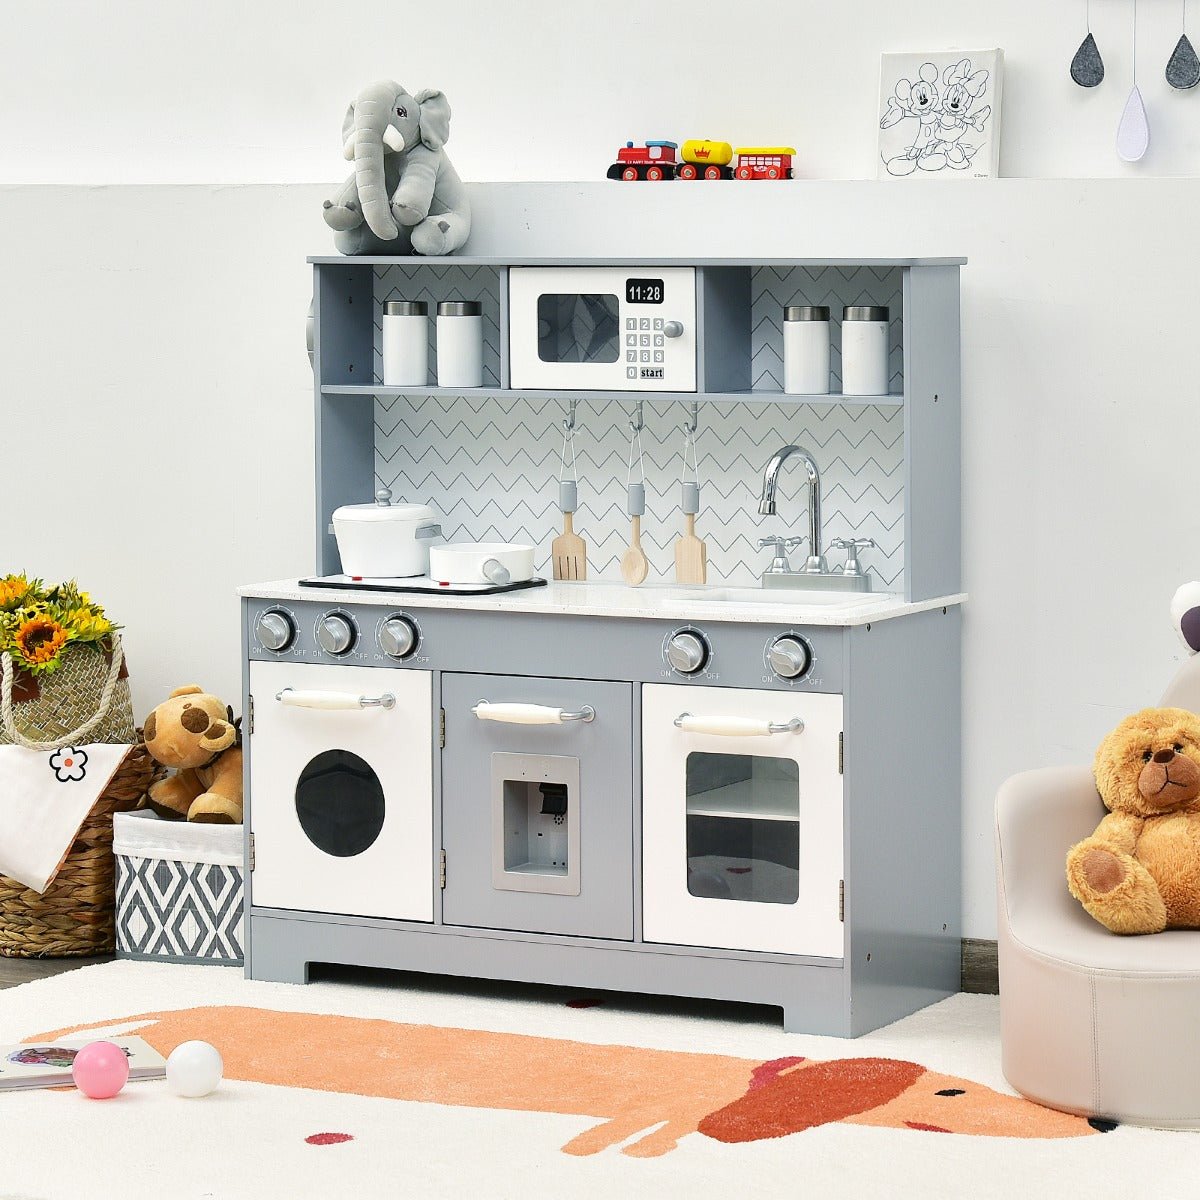 Joyful Cooking Exploration: Kids Wooden Pretend Kitchen Playset with Accessories